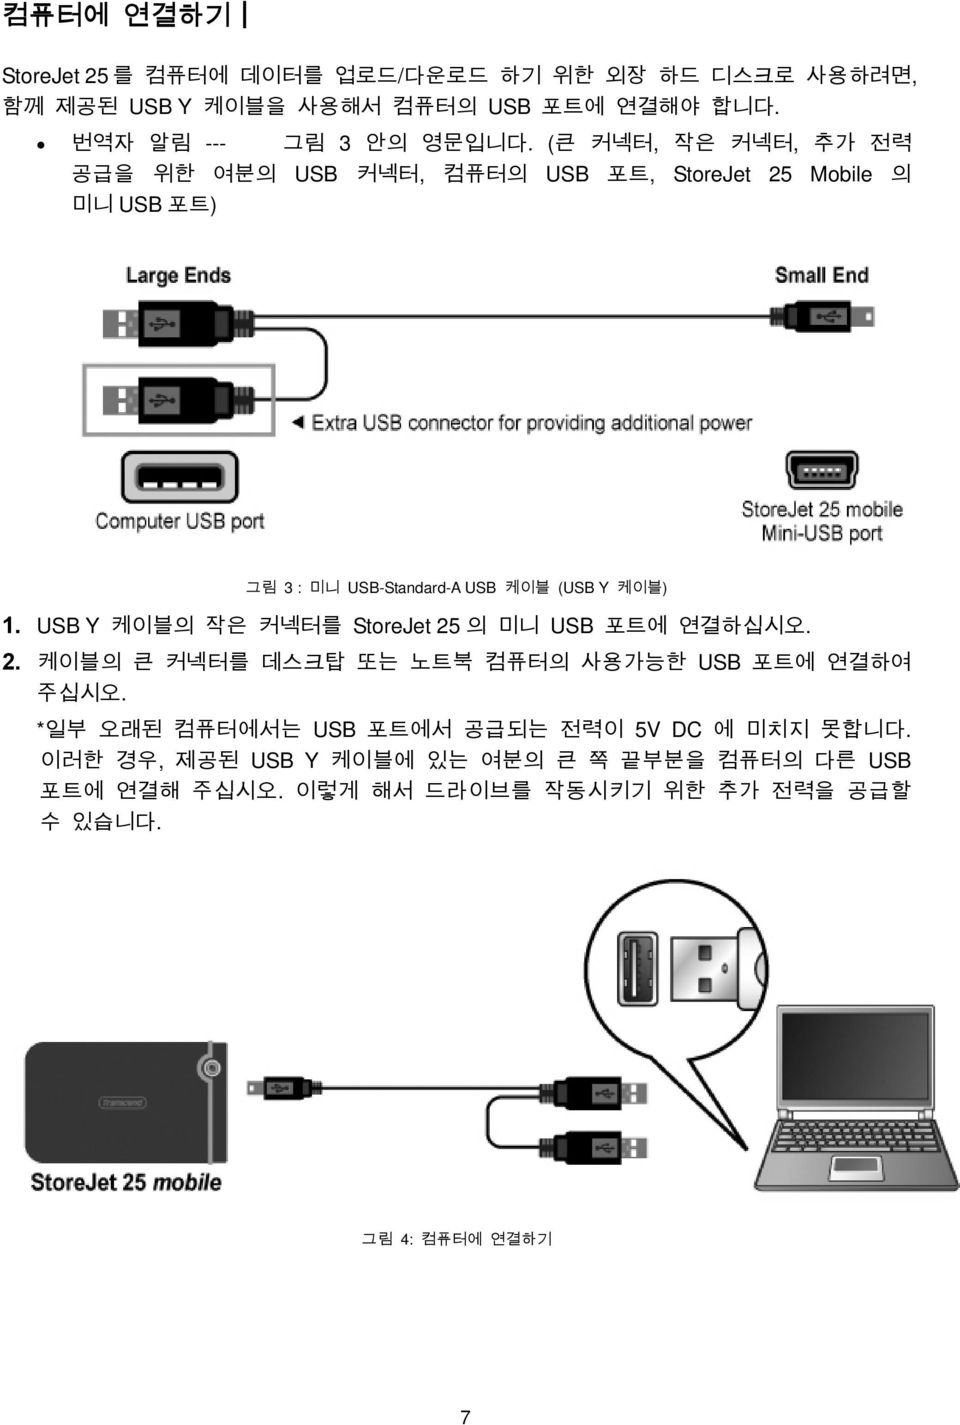 USB Y 케이블의 작은 커넥터를 StoreJet 25 의 미니 USB 포트에 연결하십시오. 2. 케이블의 큰 커넥터를 데스크탑 또는 노트북 컴퓨터의 사용가능한 USB 포트에 연결하여 주십시오.